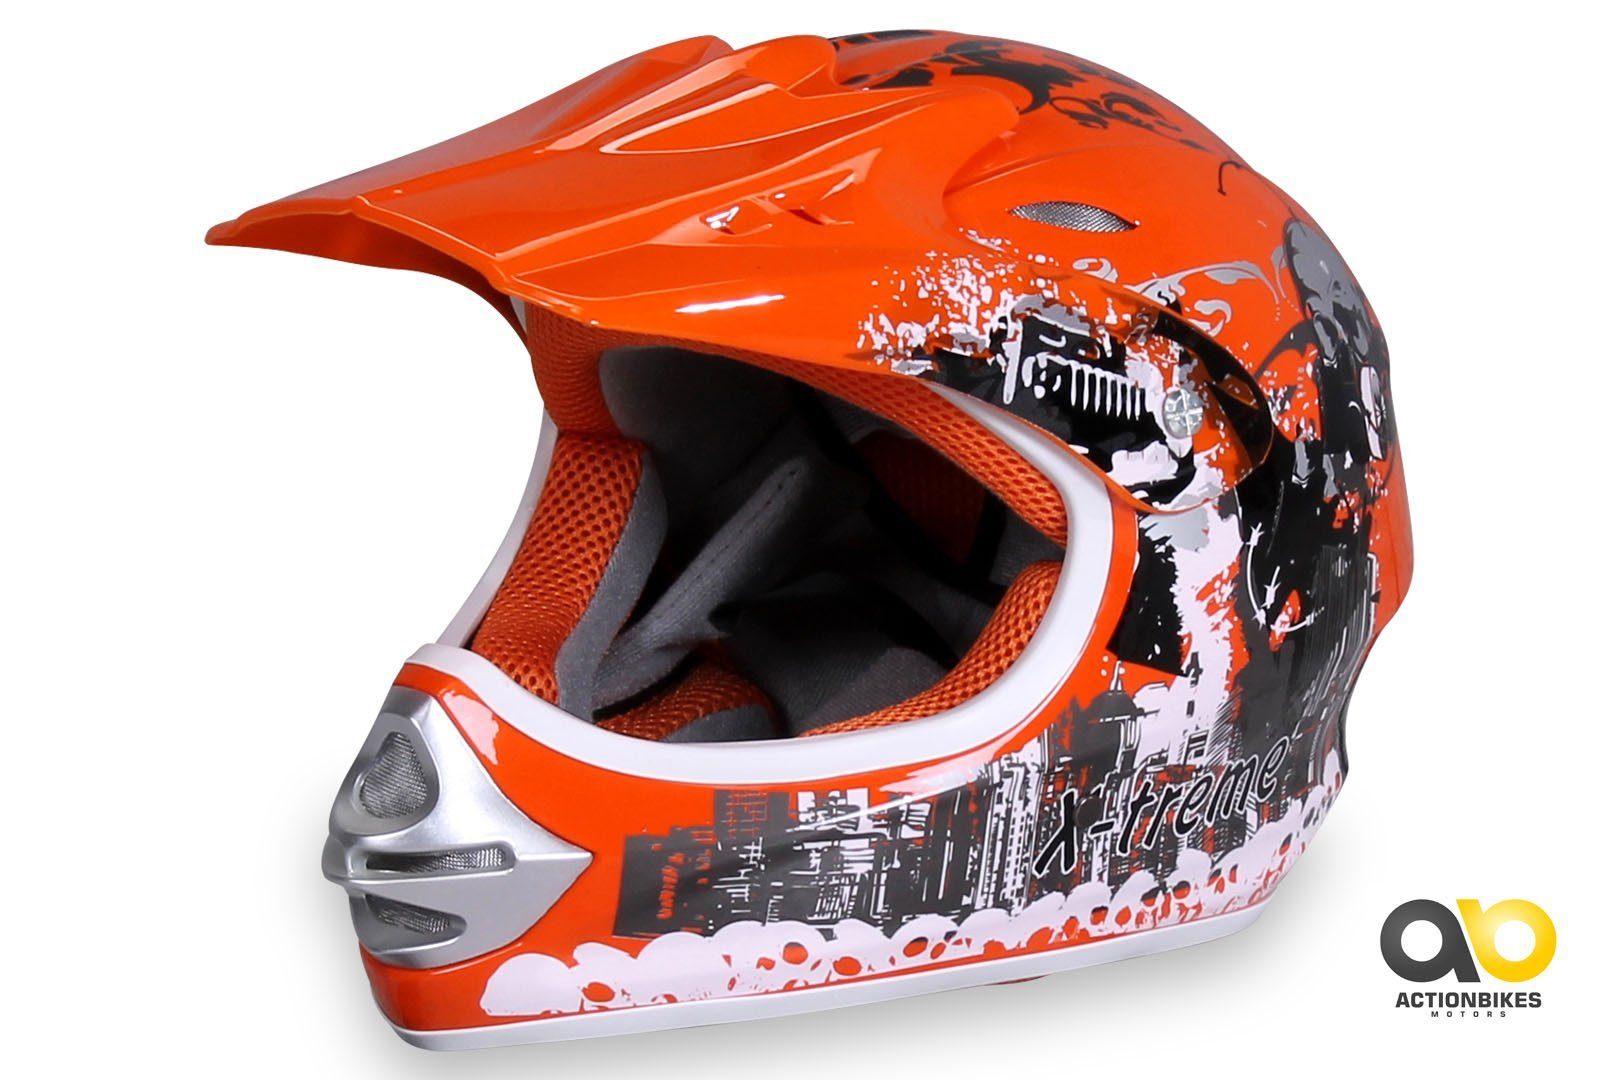 Actionbikes Motors Motocrosshelm »Crosshelm X-treme Orange«, 6 verschiedene  Größen - 49 cm bis 60 cm Kopfumfang - Kinnriemen - Be- & Entlüftungssystem  - herausnehmbares Innenpolster - Kinderhelm Crosshelm Kopfschutz  Mountainbike Helm online kaufen | OTTO